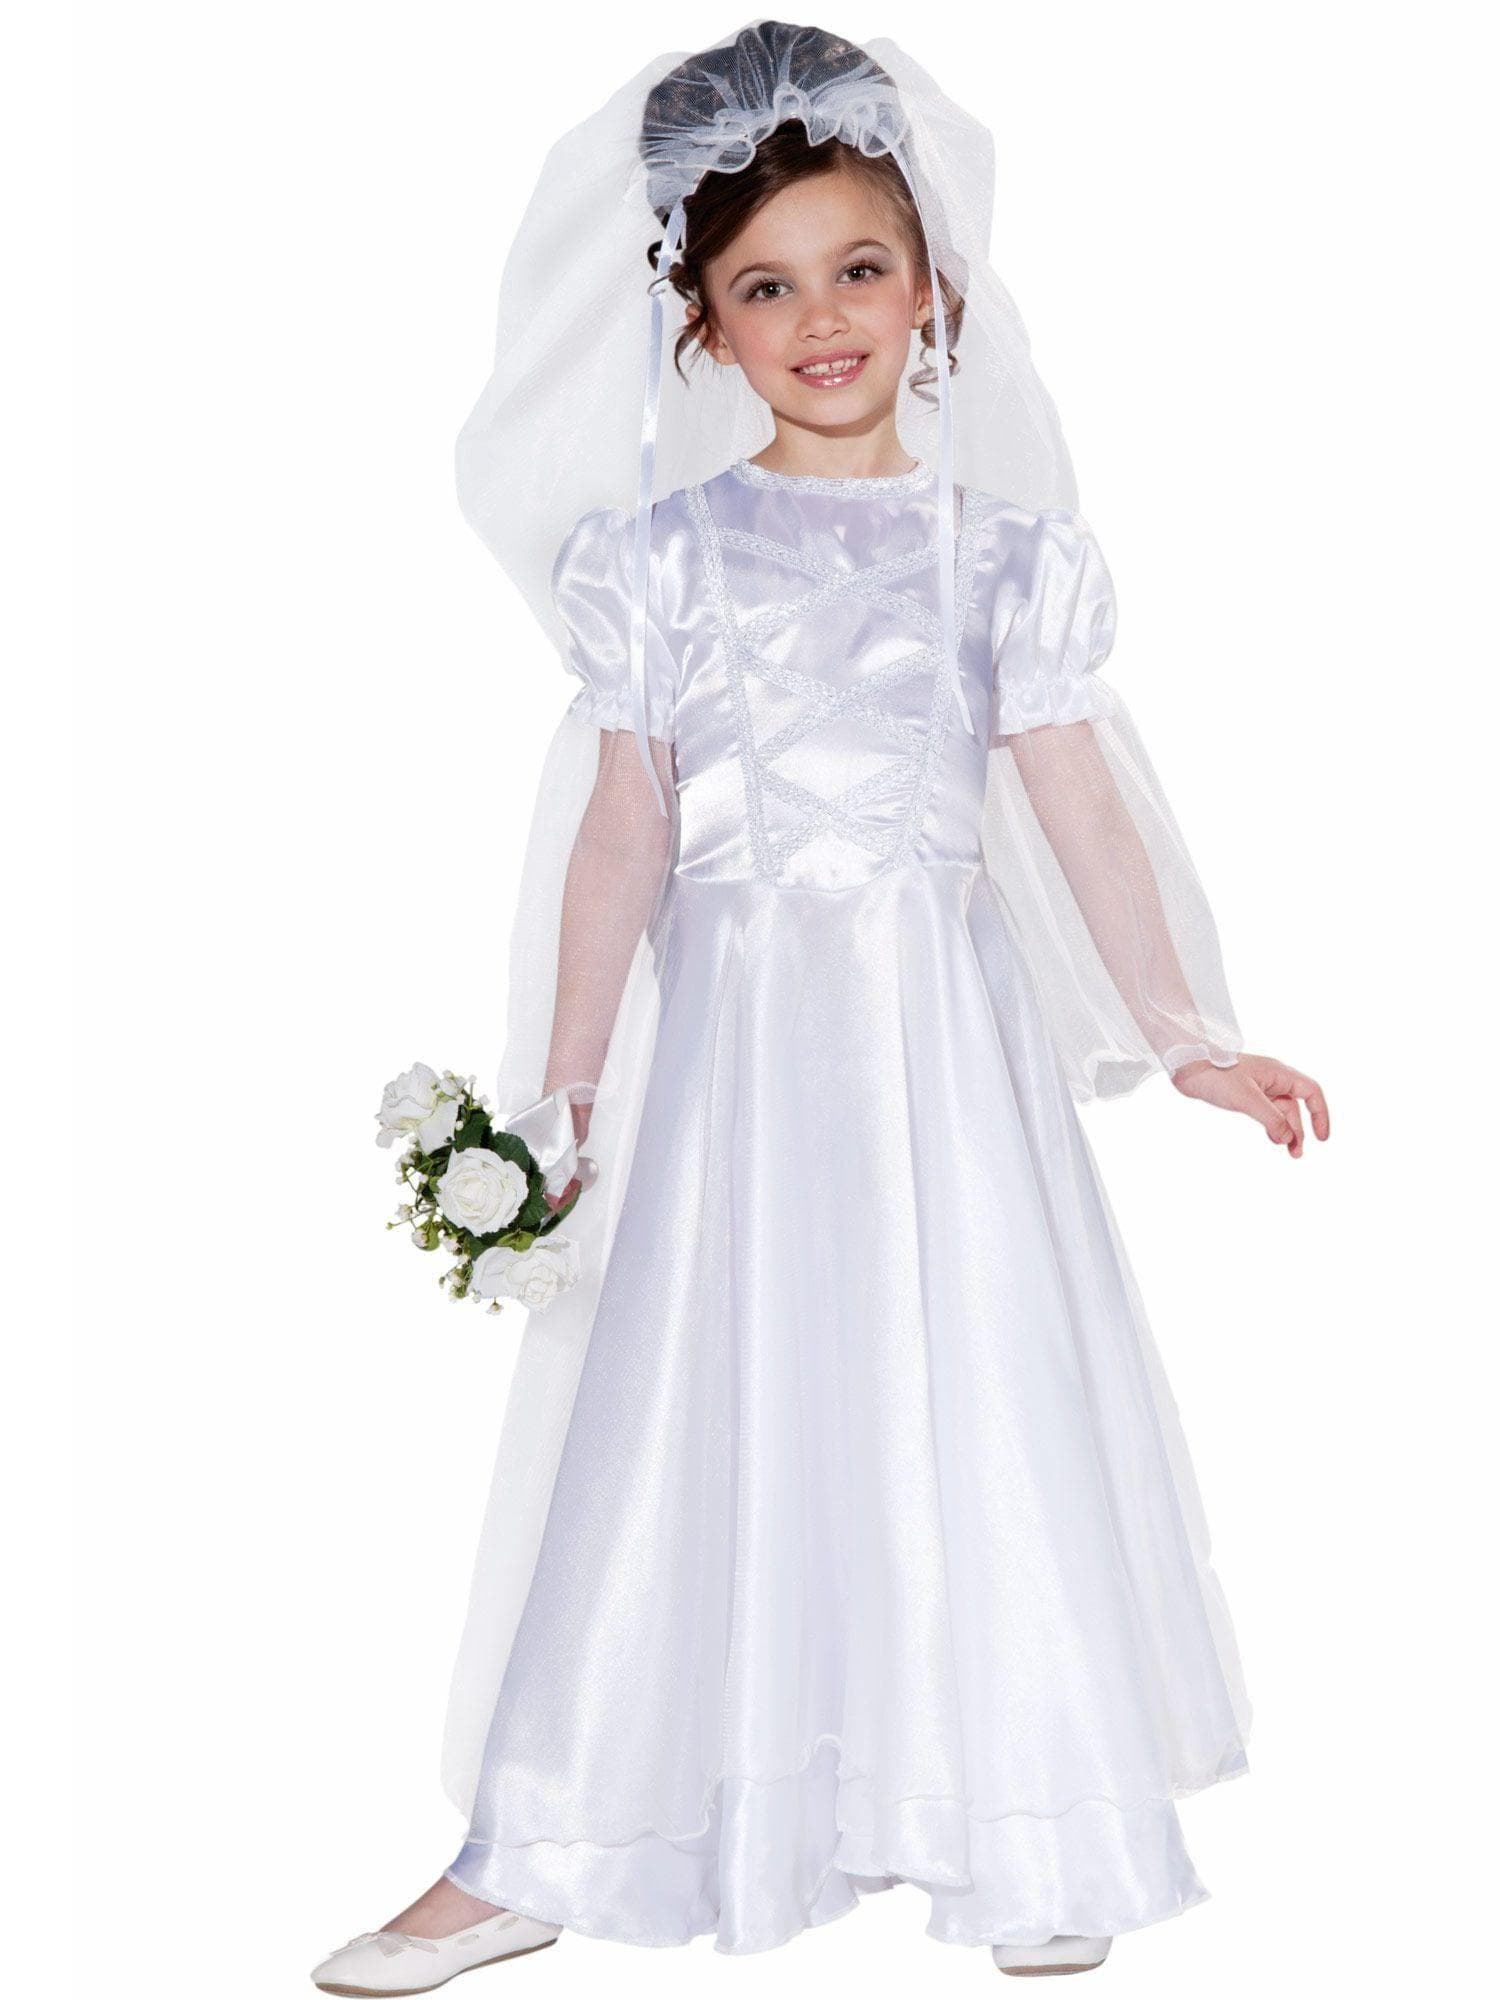 Kid's Wedding Belle Costume - costumes.com